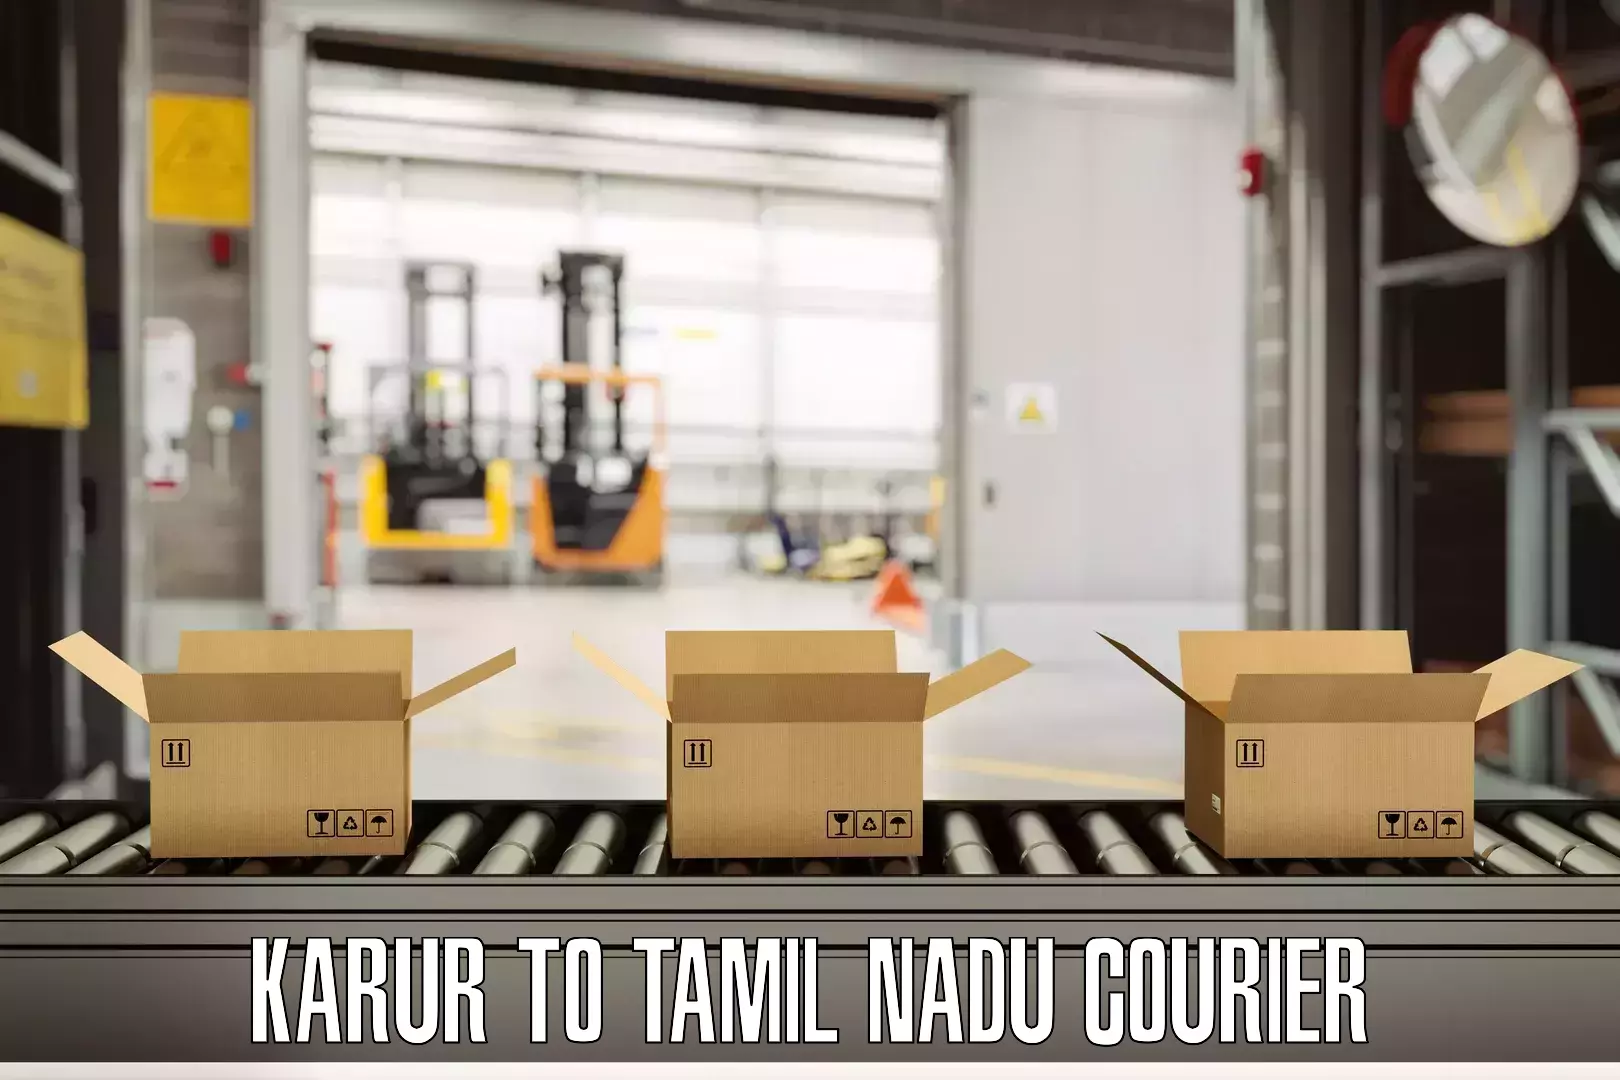 Same day luggage service Karur to Tamil Nadu